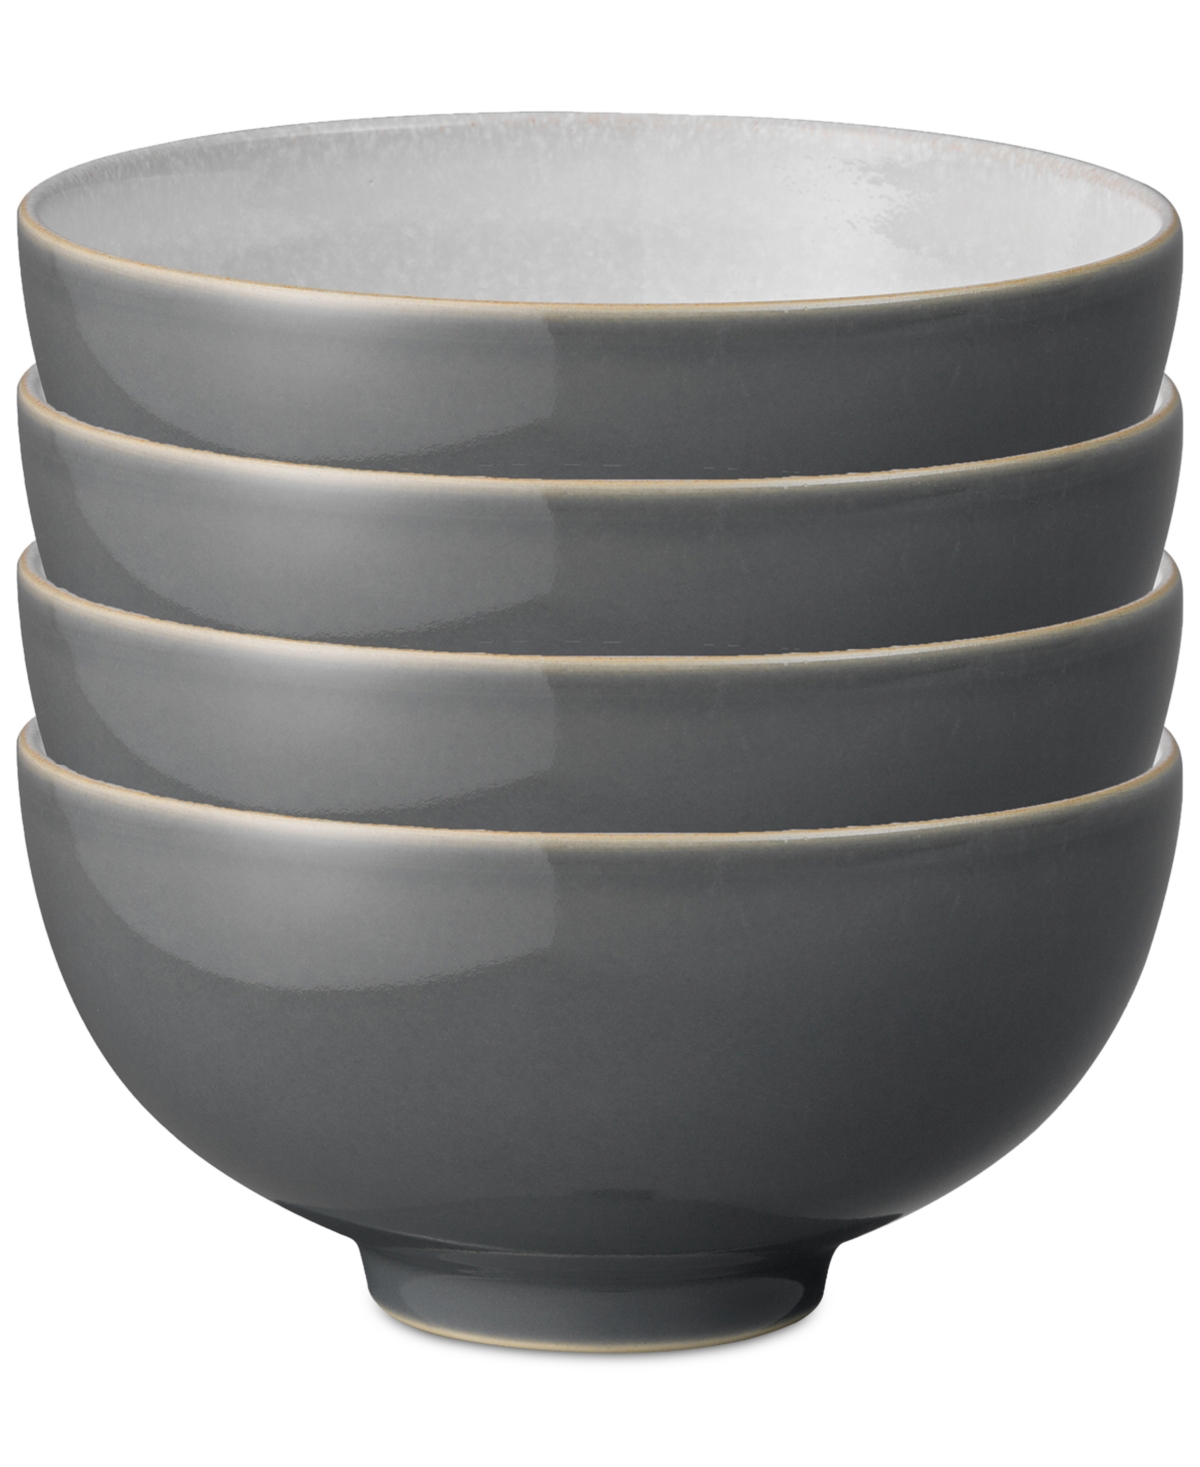 Elements Collection Stoneware Rice Bowls, Set of 4 - Dark Grey